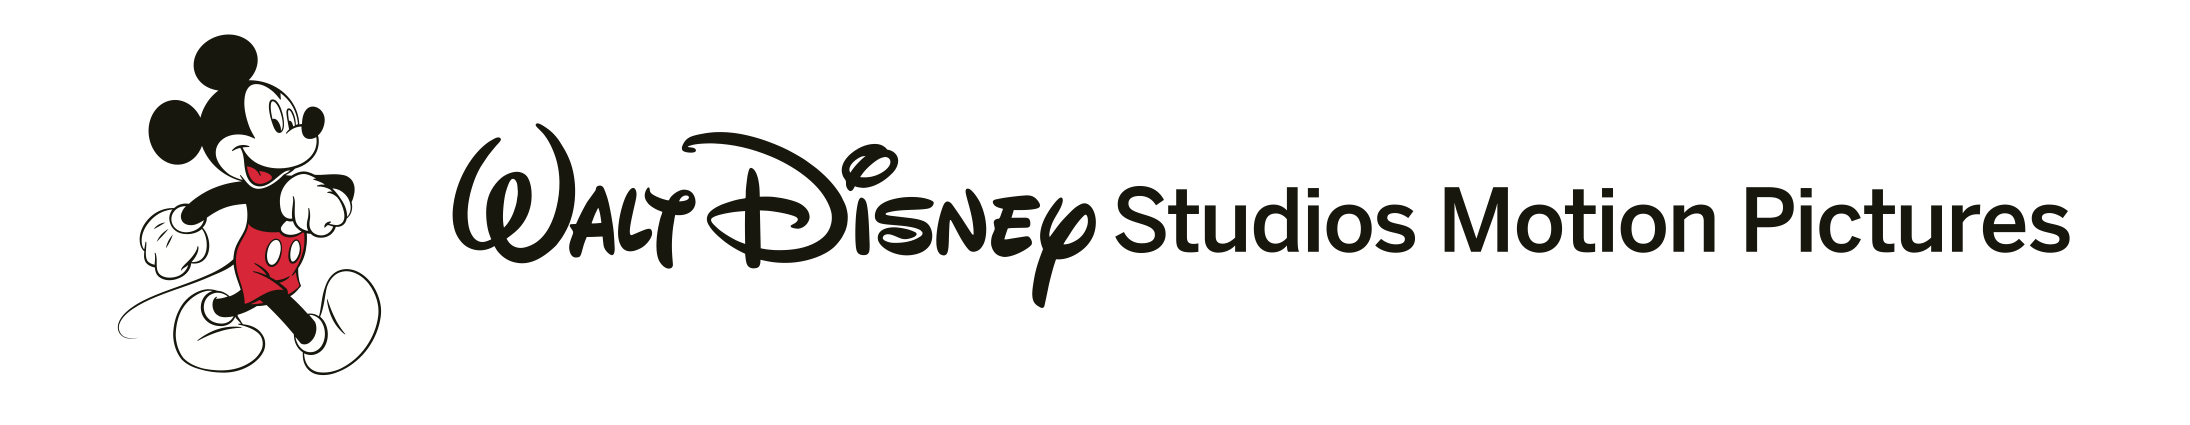 Walt Disney Studios Motion Pictures Logo - The Walt Disney Studios Movies Logo the Go